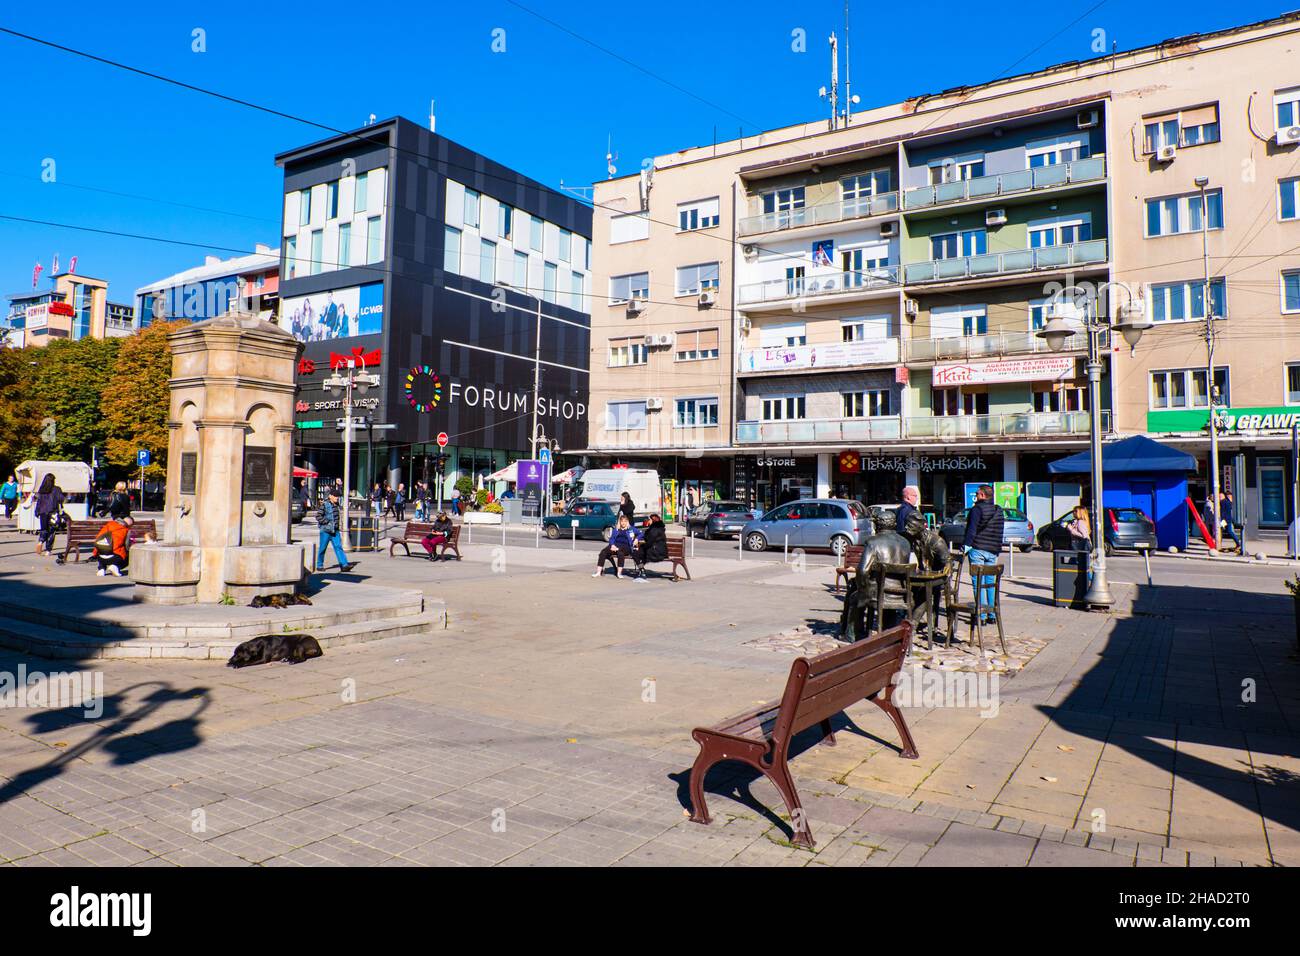 Kopitareva, pedestrian street, Niš, Serbia Stock Photo